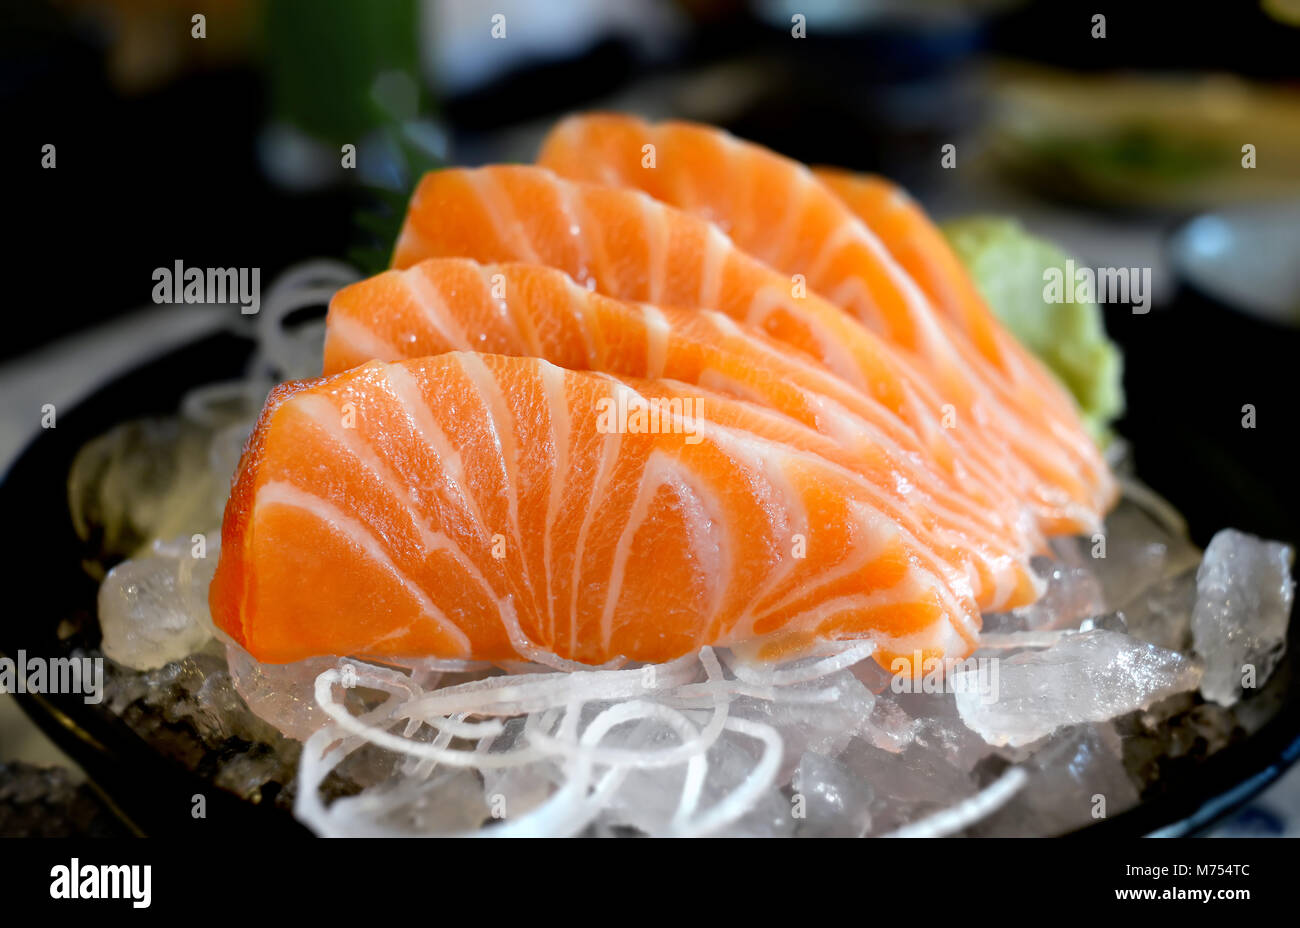 Raw salmon slice or salmon sashimi in Japanese style fresh serve on ice with fresh wasabi photo in  indoor low lighting. Stock Photo